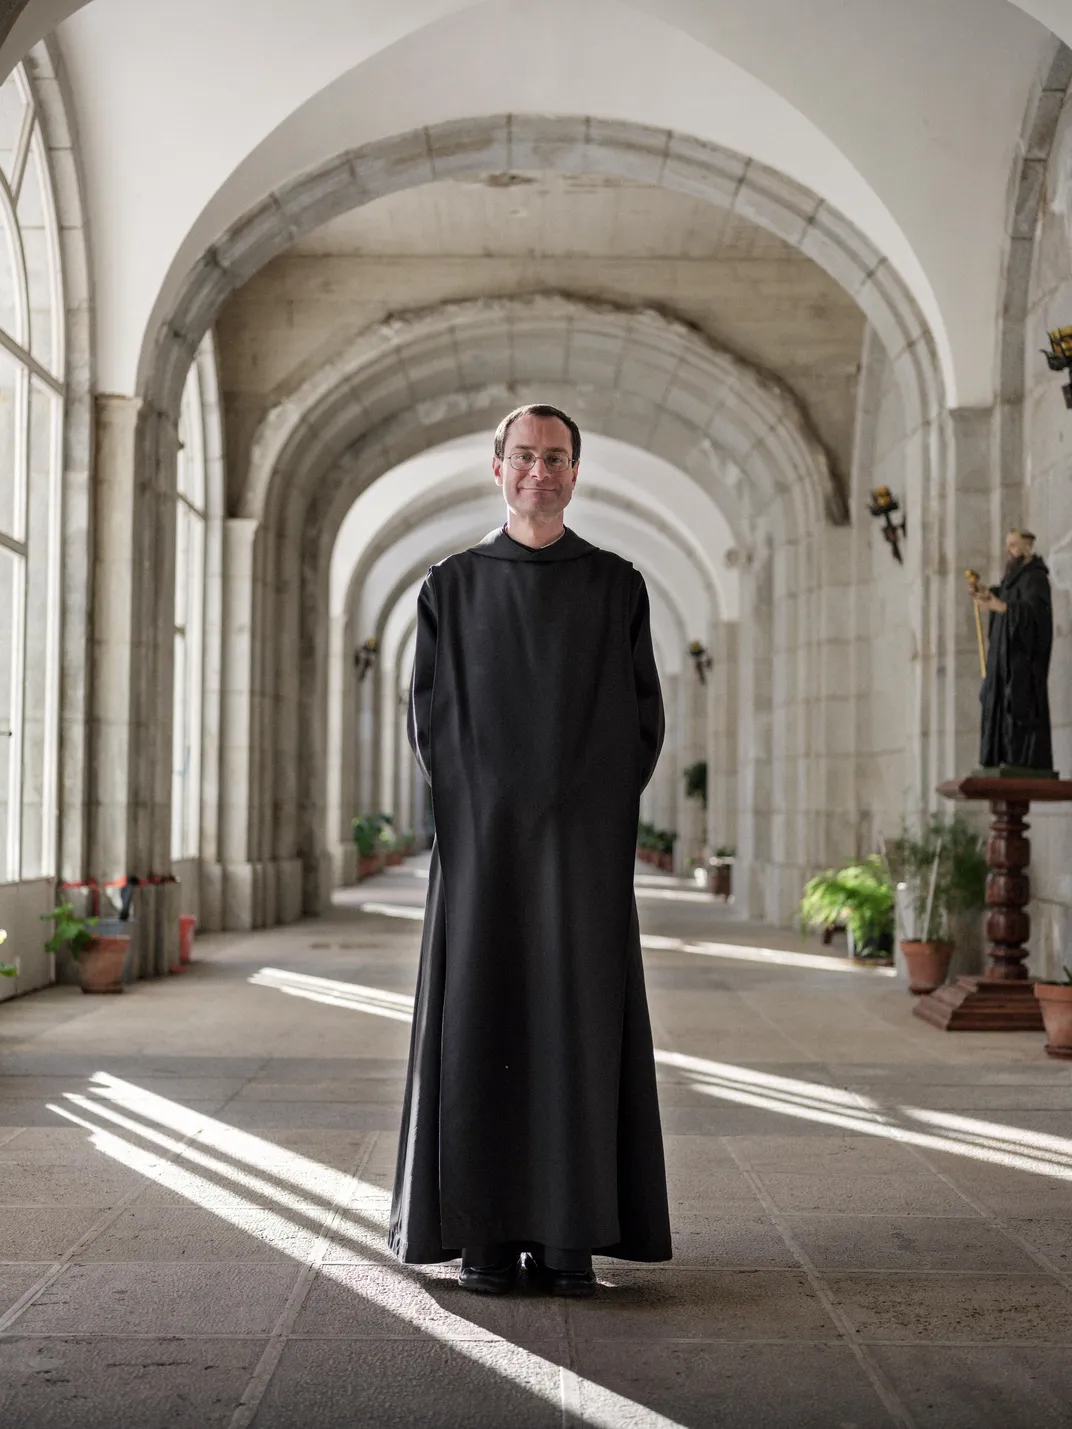 Father Santiago Cantera’s opposition